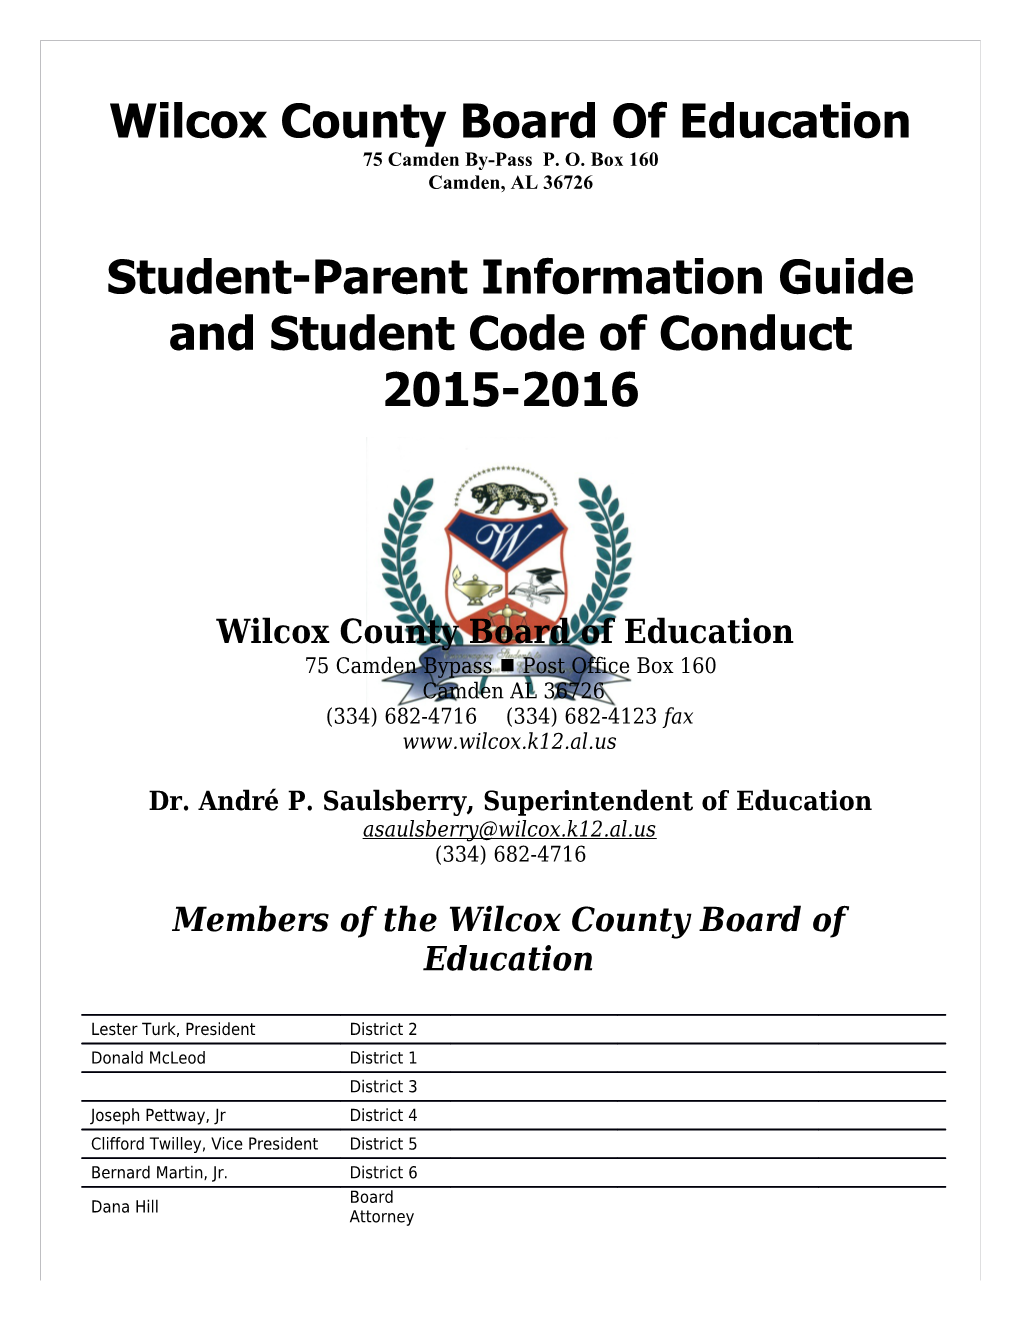 Wilcox County Board of Education